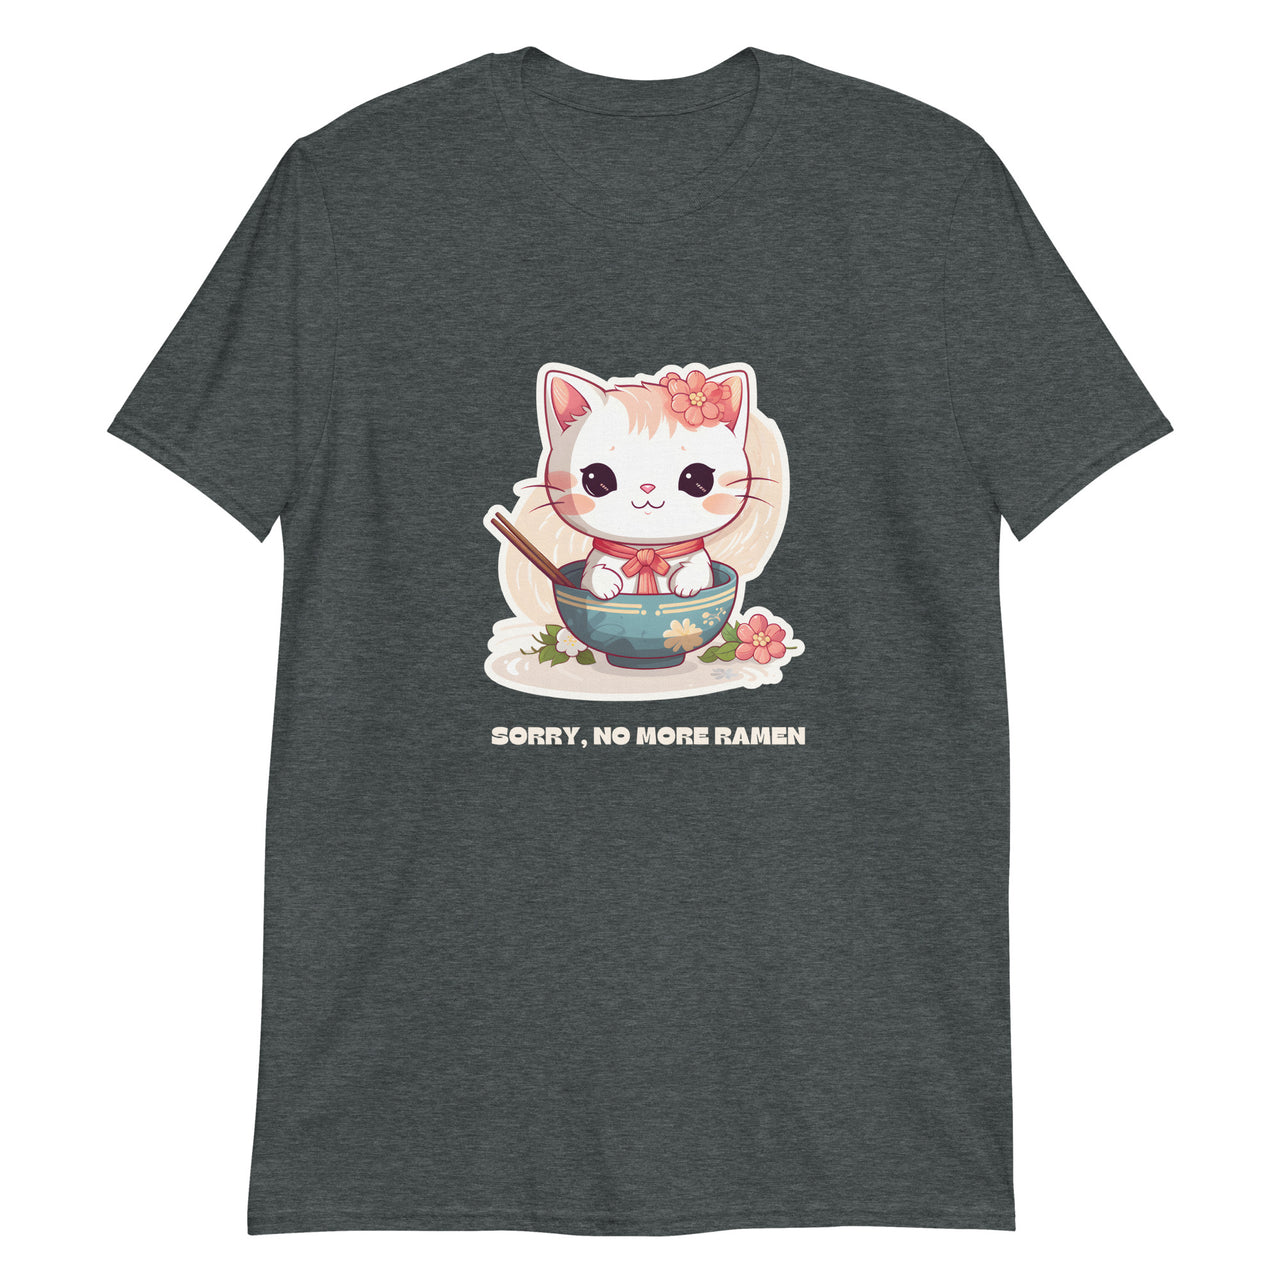 Sorry, No More Ramen: Anime Cat T-Shirt